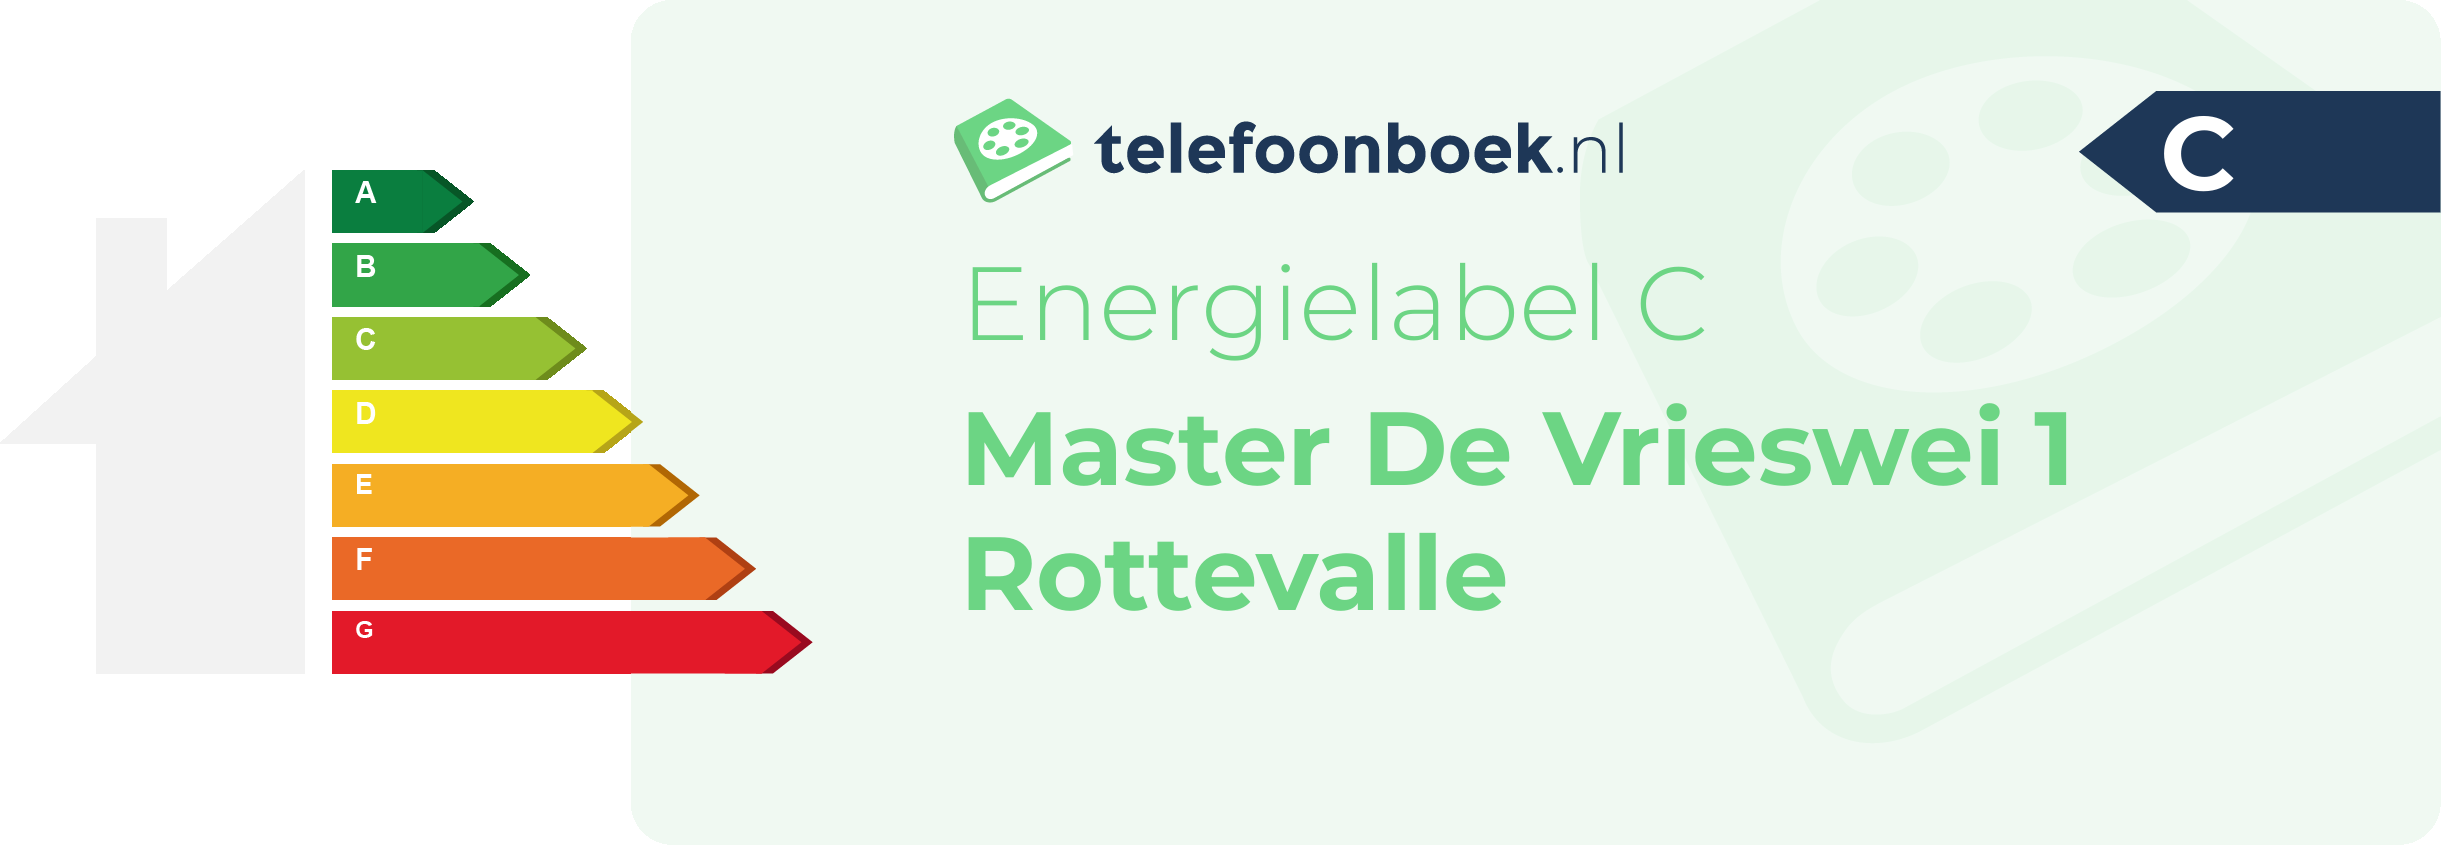 Energielabel Master De Vrieswei 1 Rottevalle